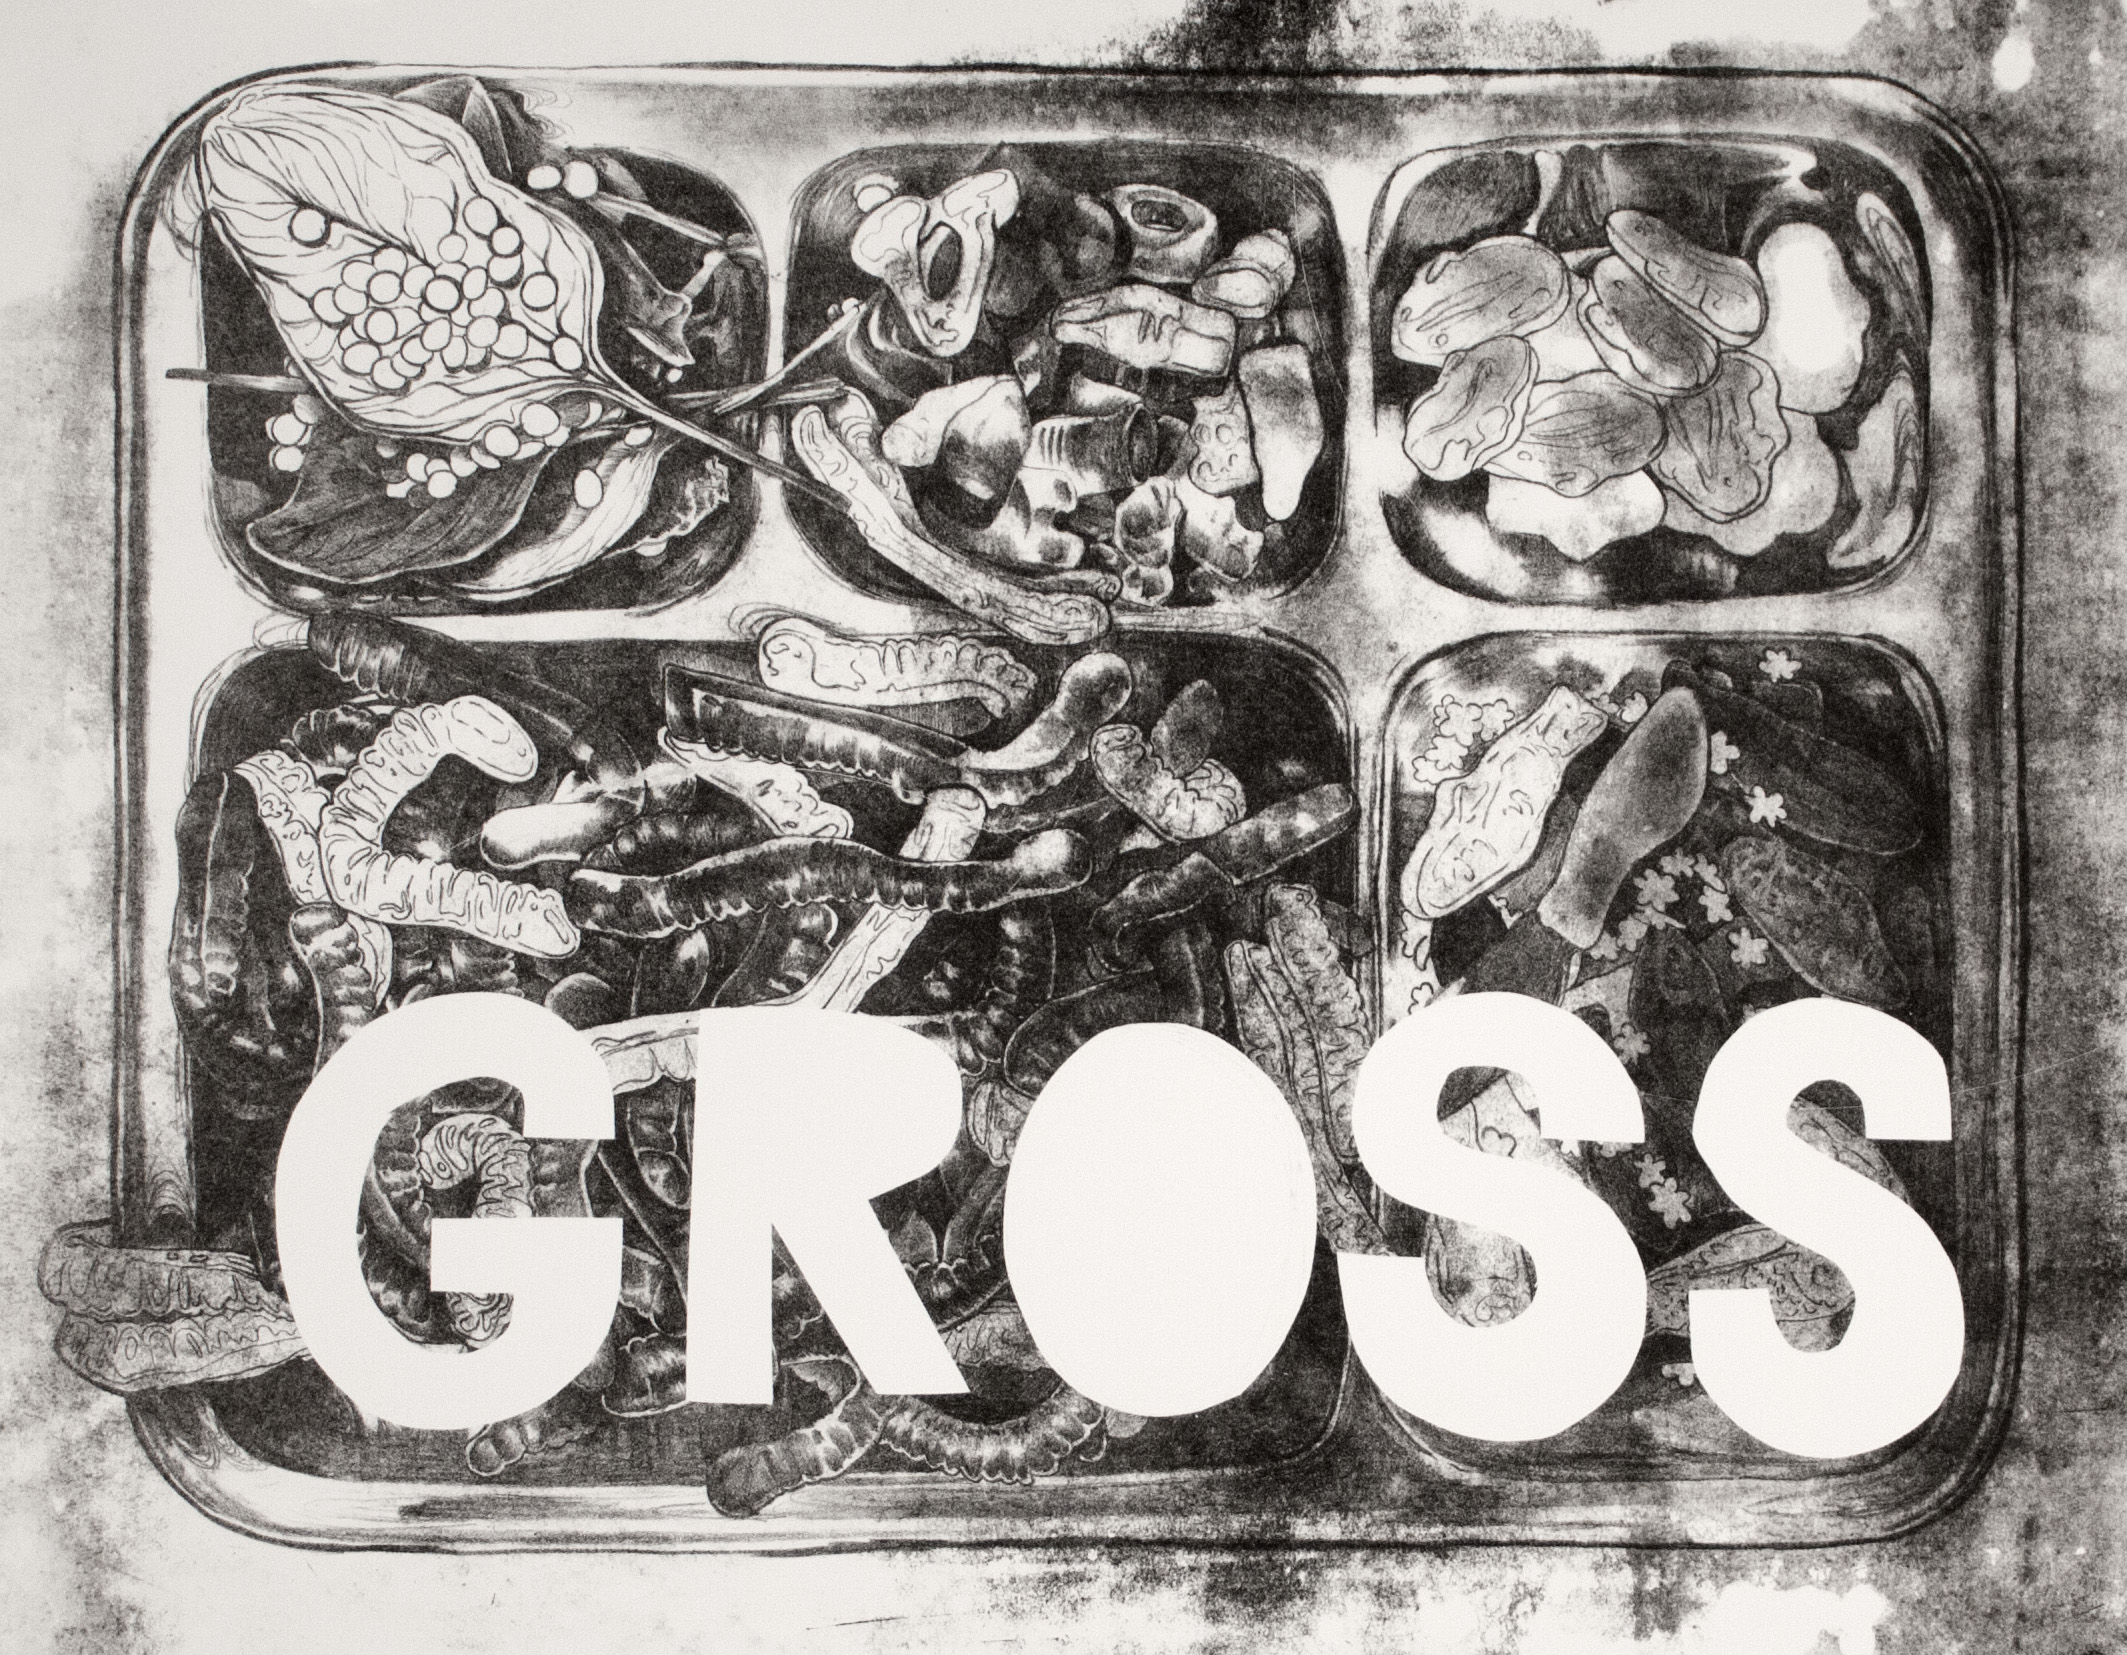  “Gross II” Stone lithographic monoprint 18”x24” 